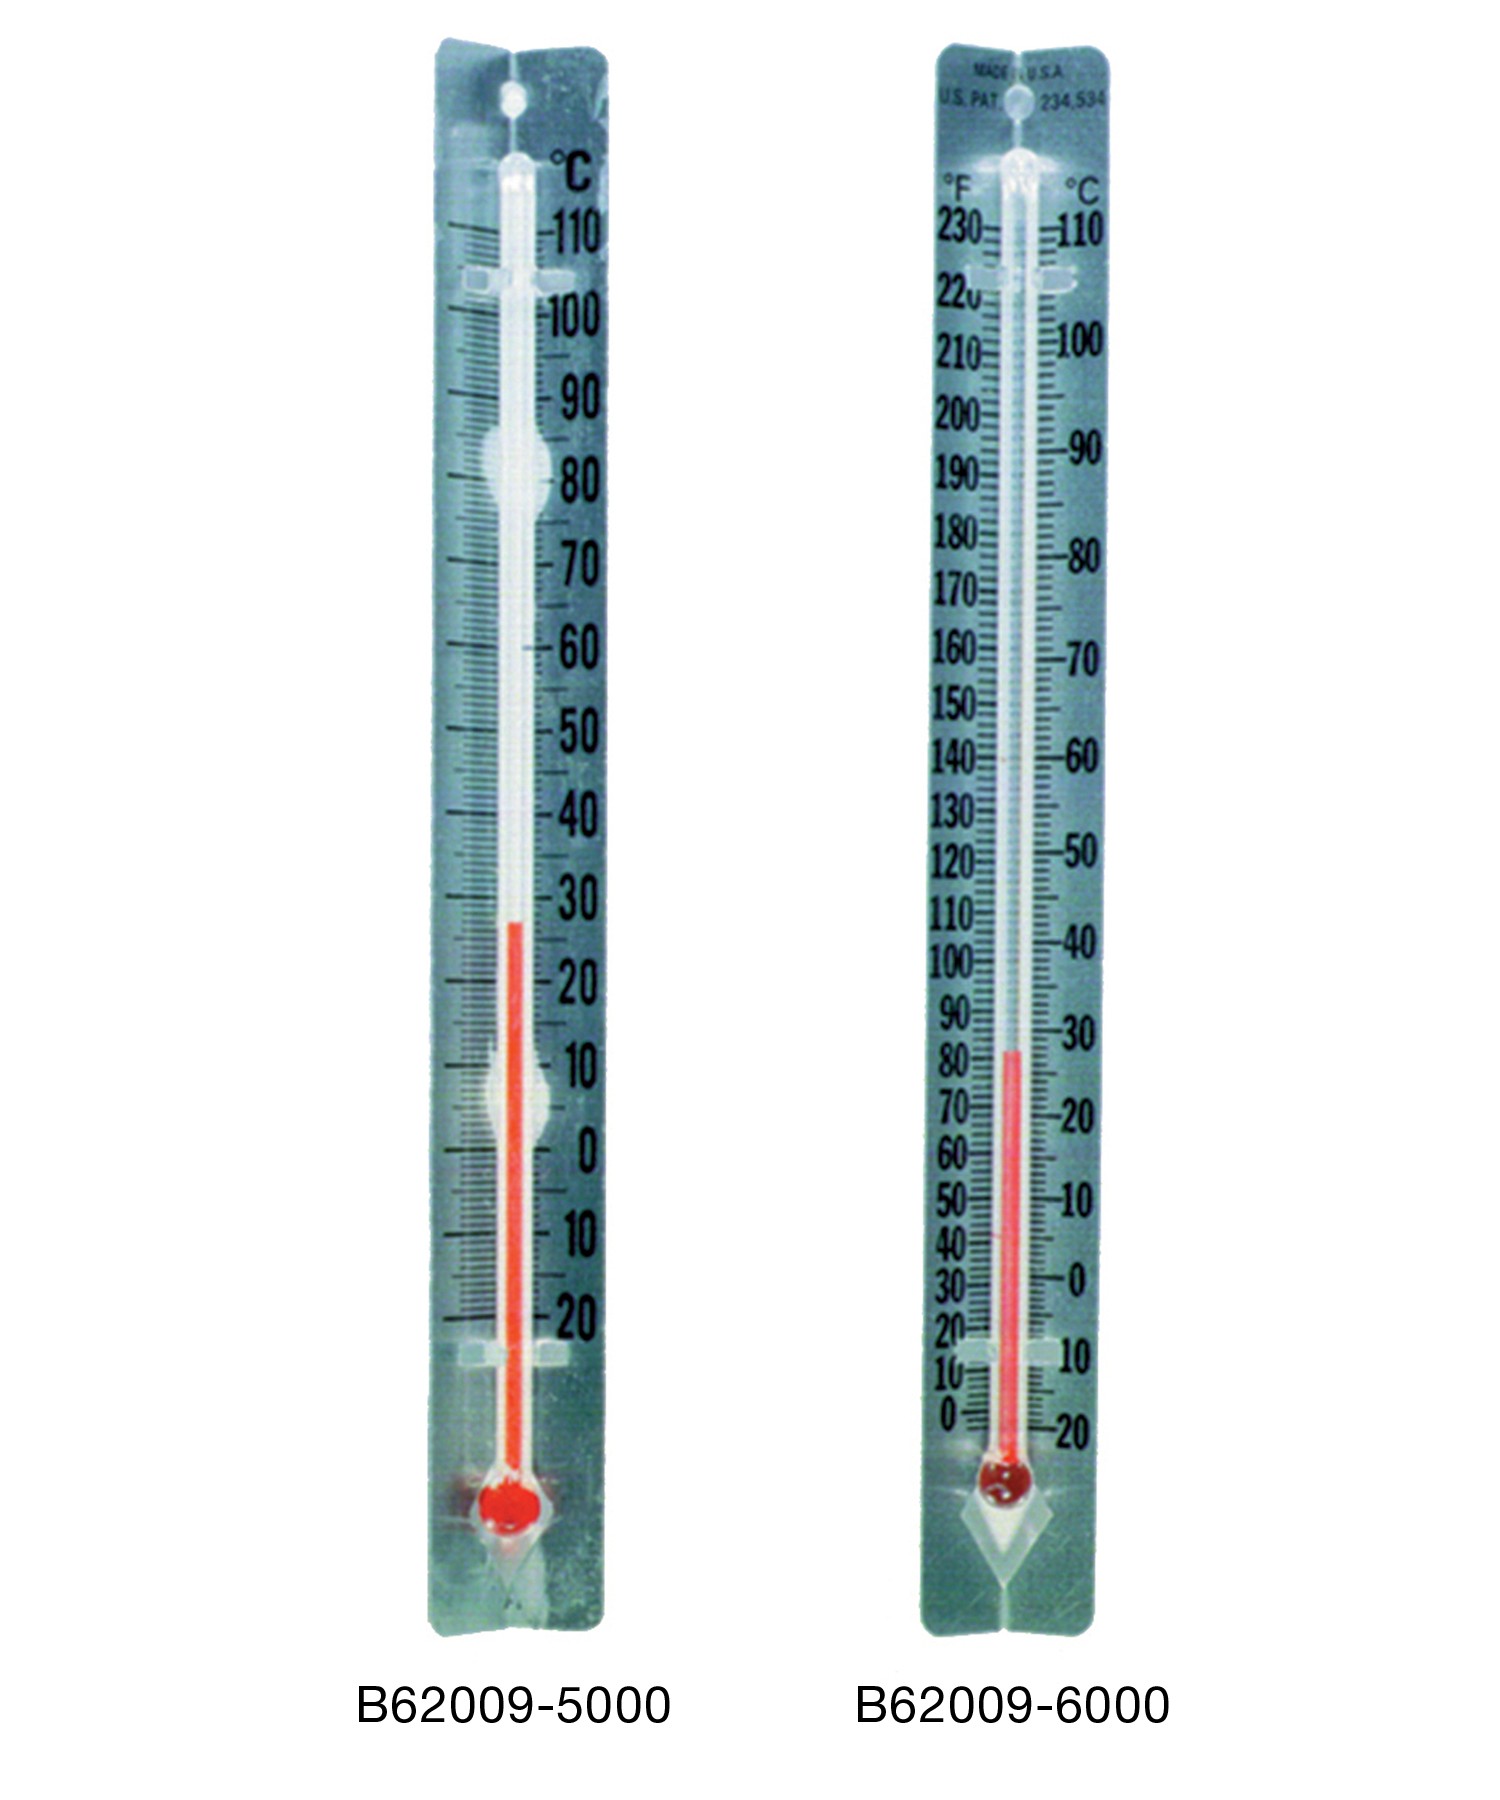 H-B DURAC V-Back Liquid-In-Glass Laboratory Thermometers; Organic Liquid Filled